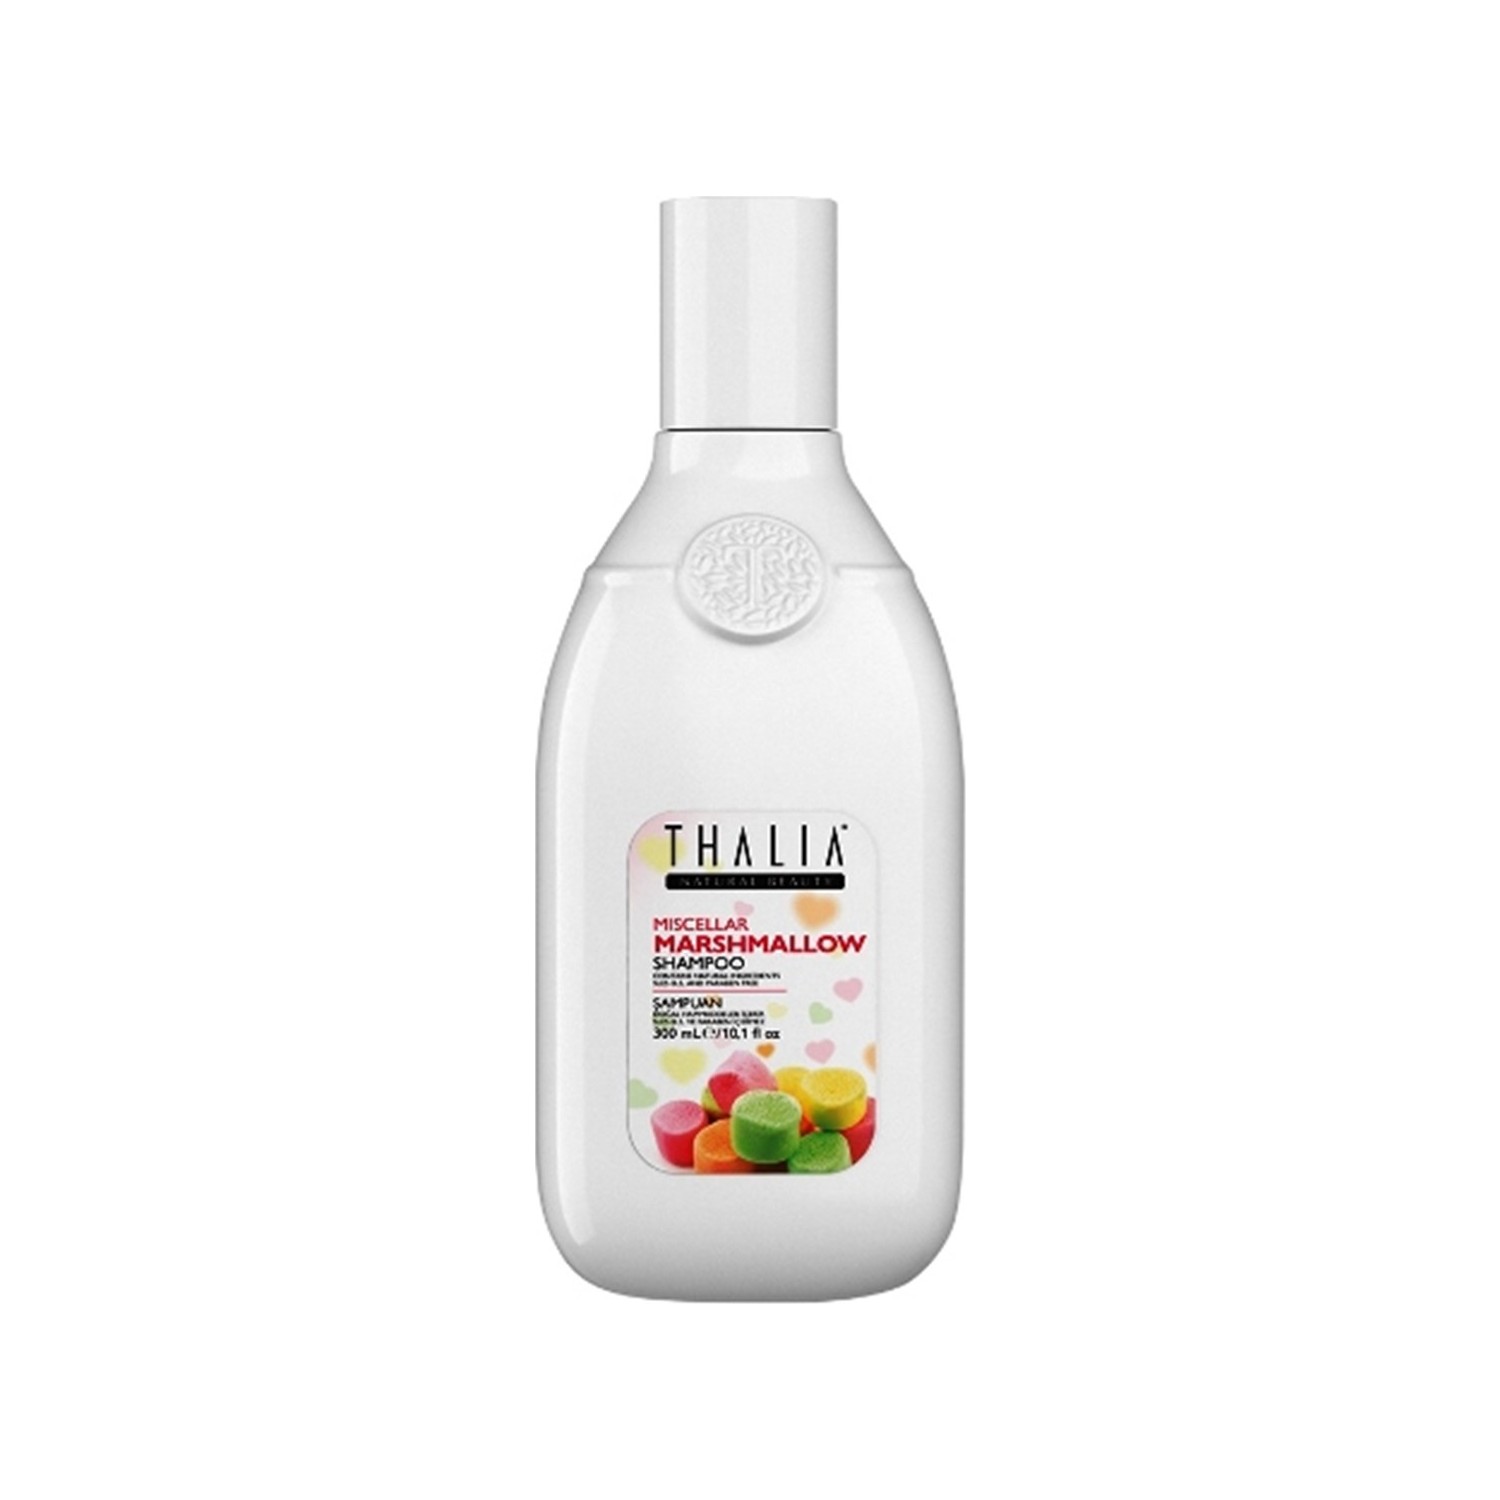 thalia natural beauty pro keratin perfection cream Мицеллярный шампунь Thalia Natural Beauty Marshmallow, 300 мл